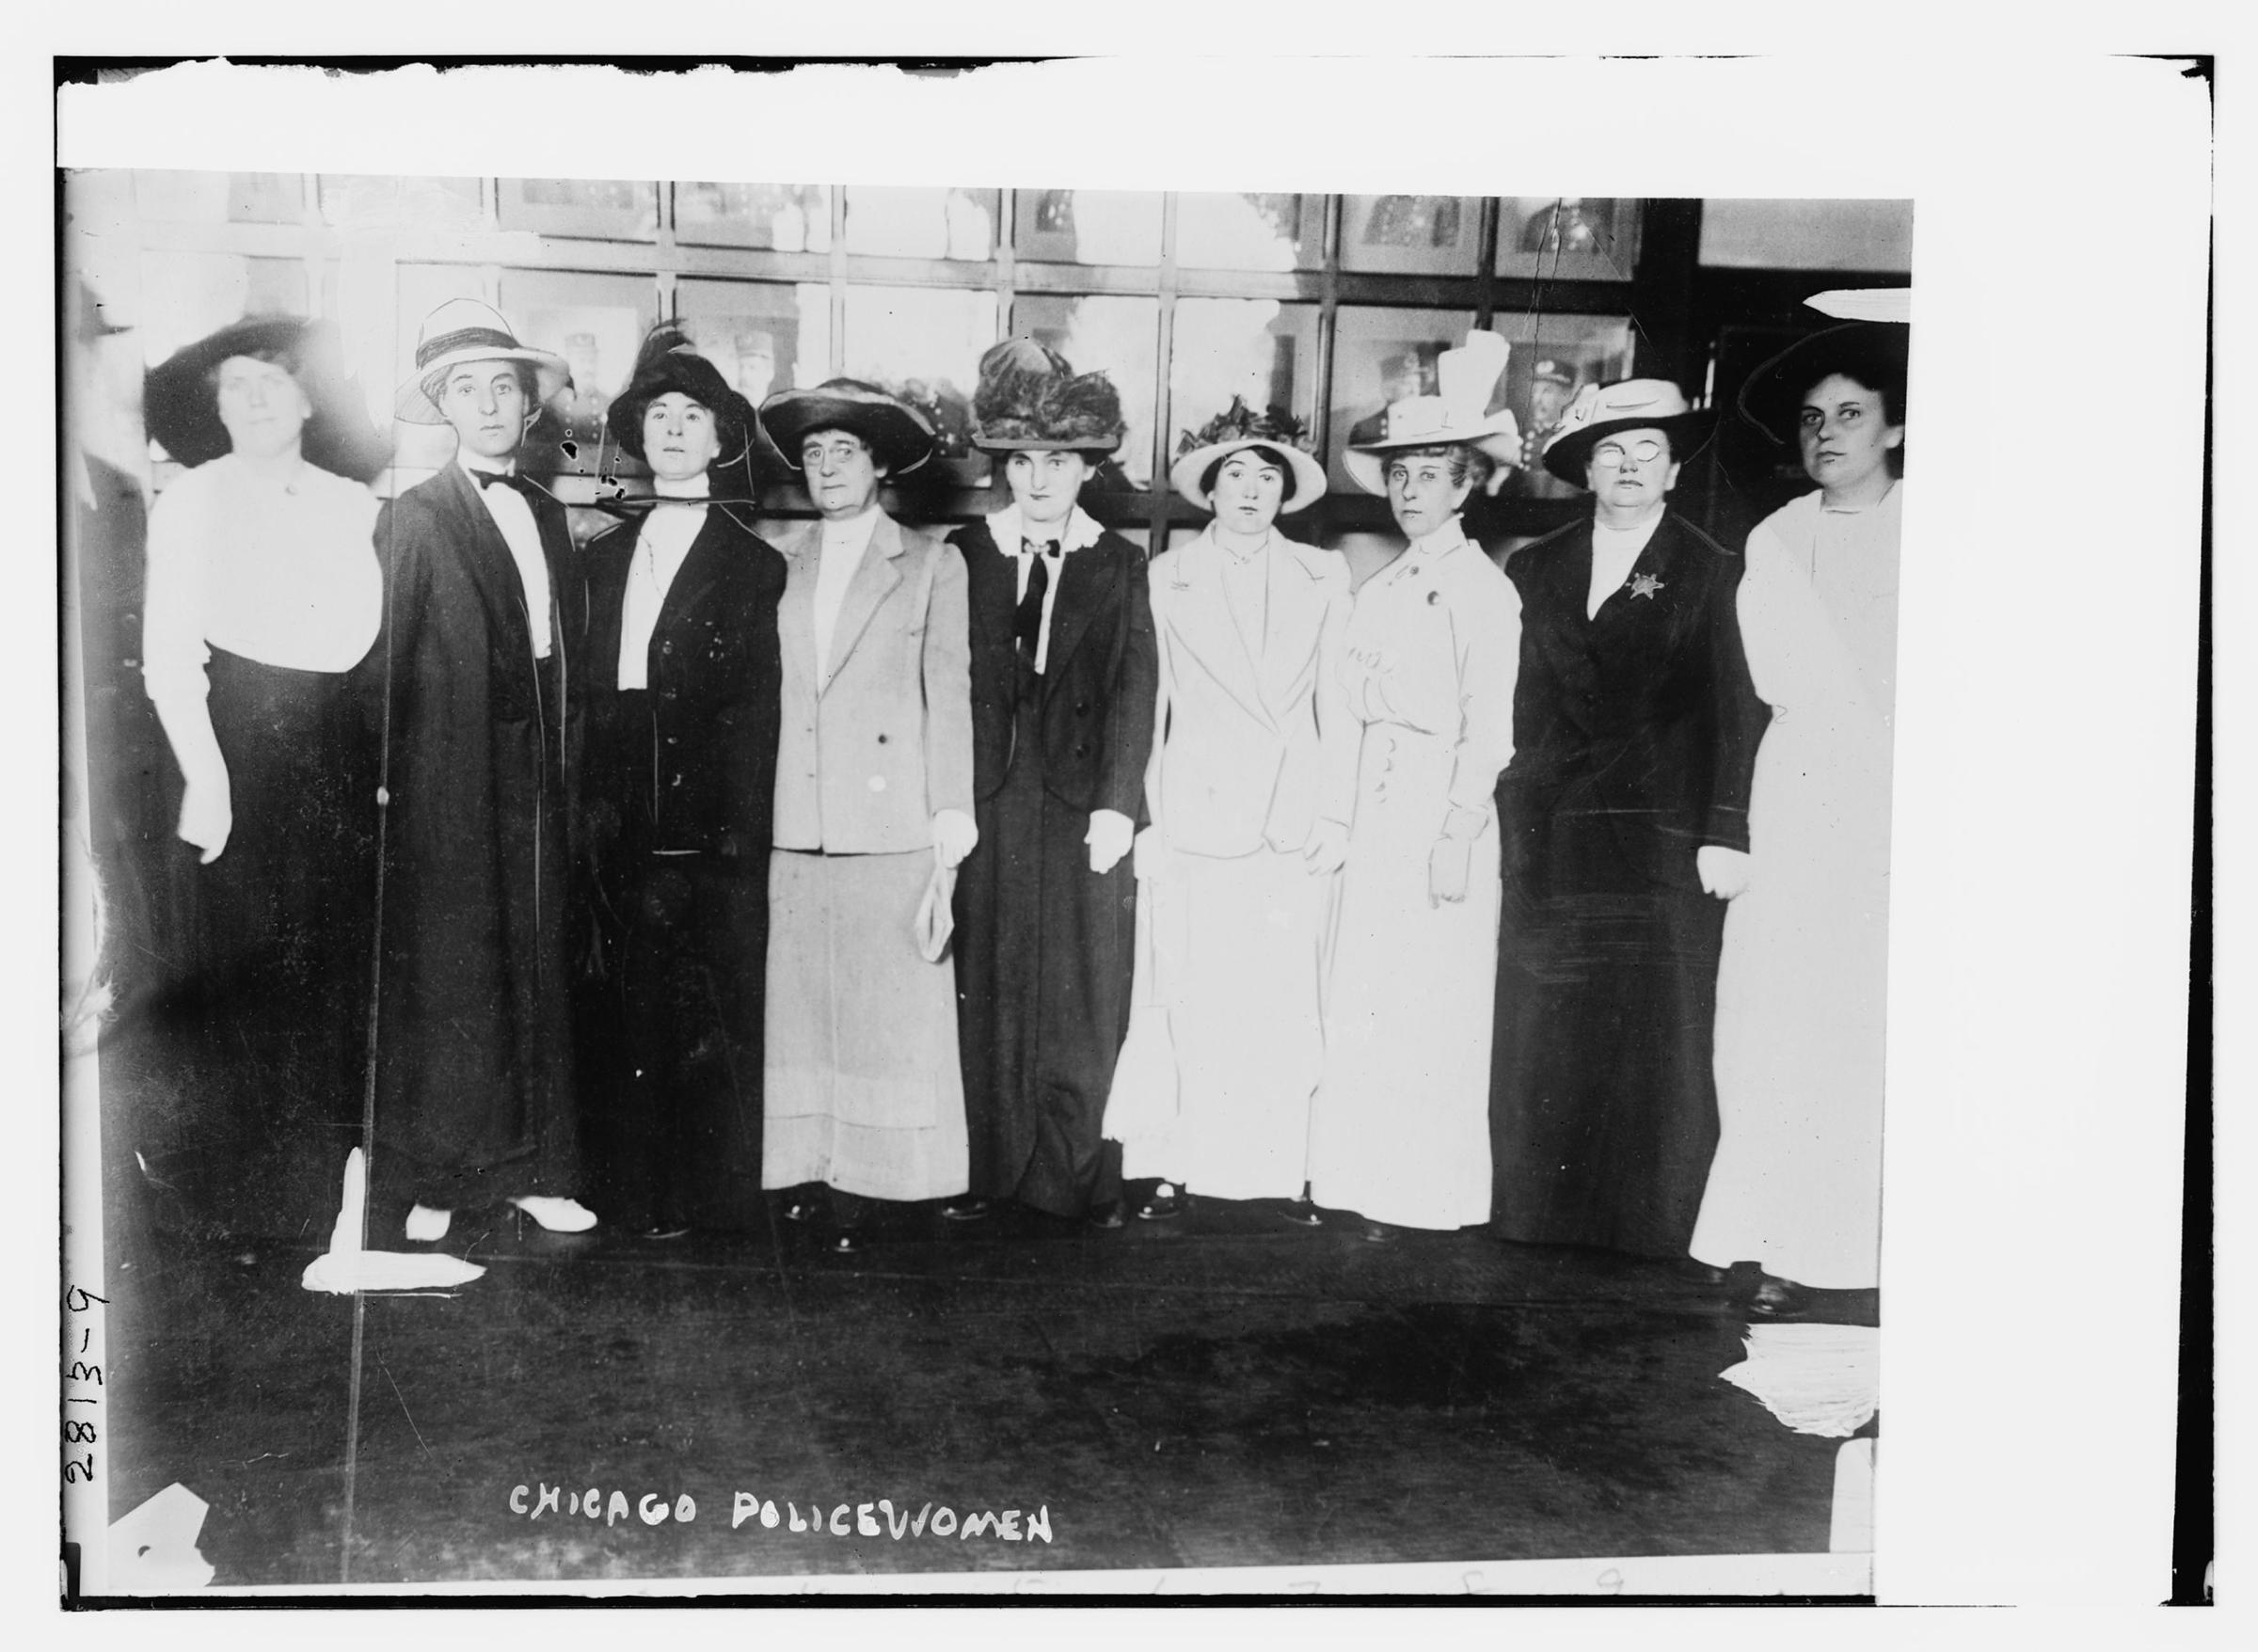 Ten women joined the Chicago police department in 1913. They are (left to right) Mrs. Anna Loucks, Miss Clara Olsen, Miss Fannie Willsey, Miss Margaret Wilson, Mrs. L. C. Parks, Mrs. Margaret Butler, Mrs. Alice Clement, Mrs. Emma F. Neukon, Mrs. T. D. Meder, and Gertrude Howe Britton.